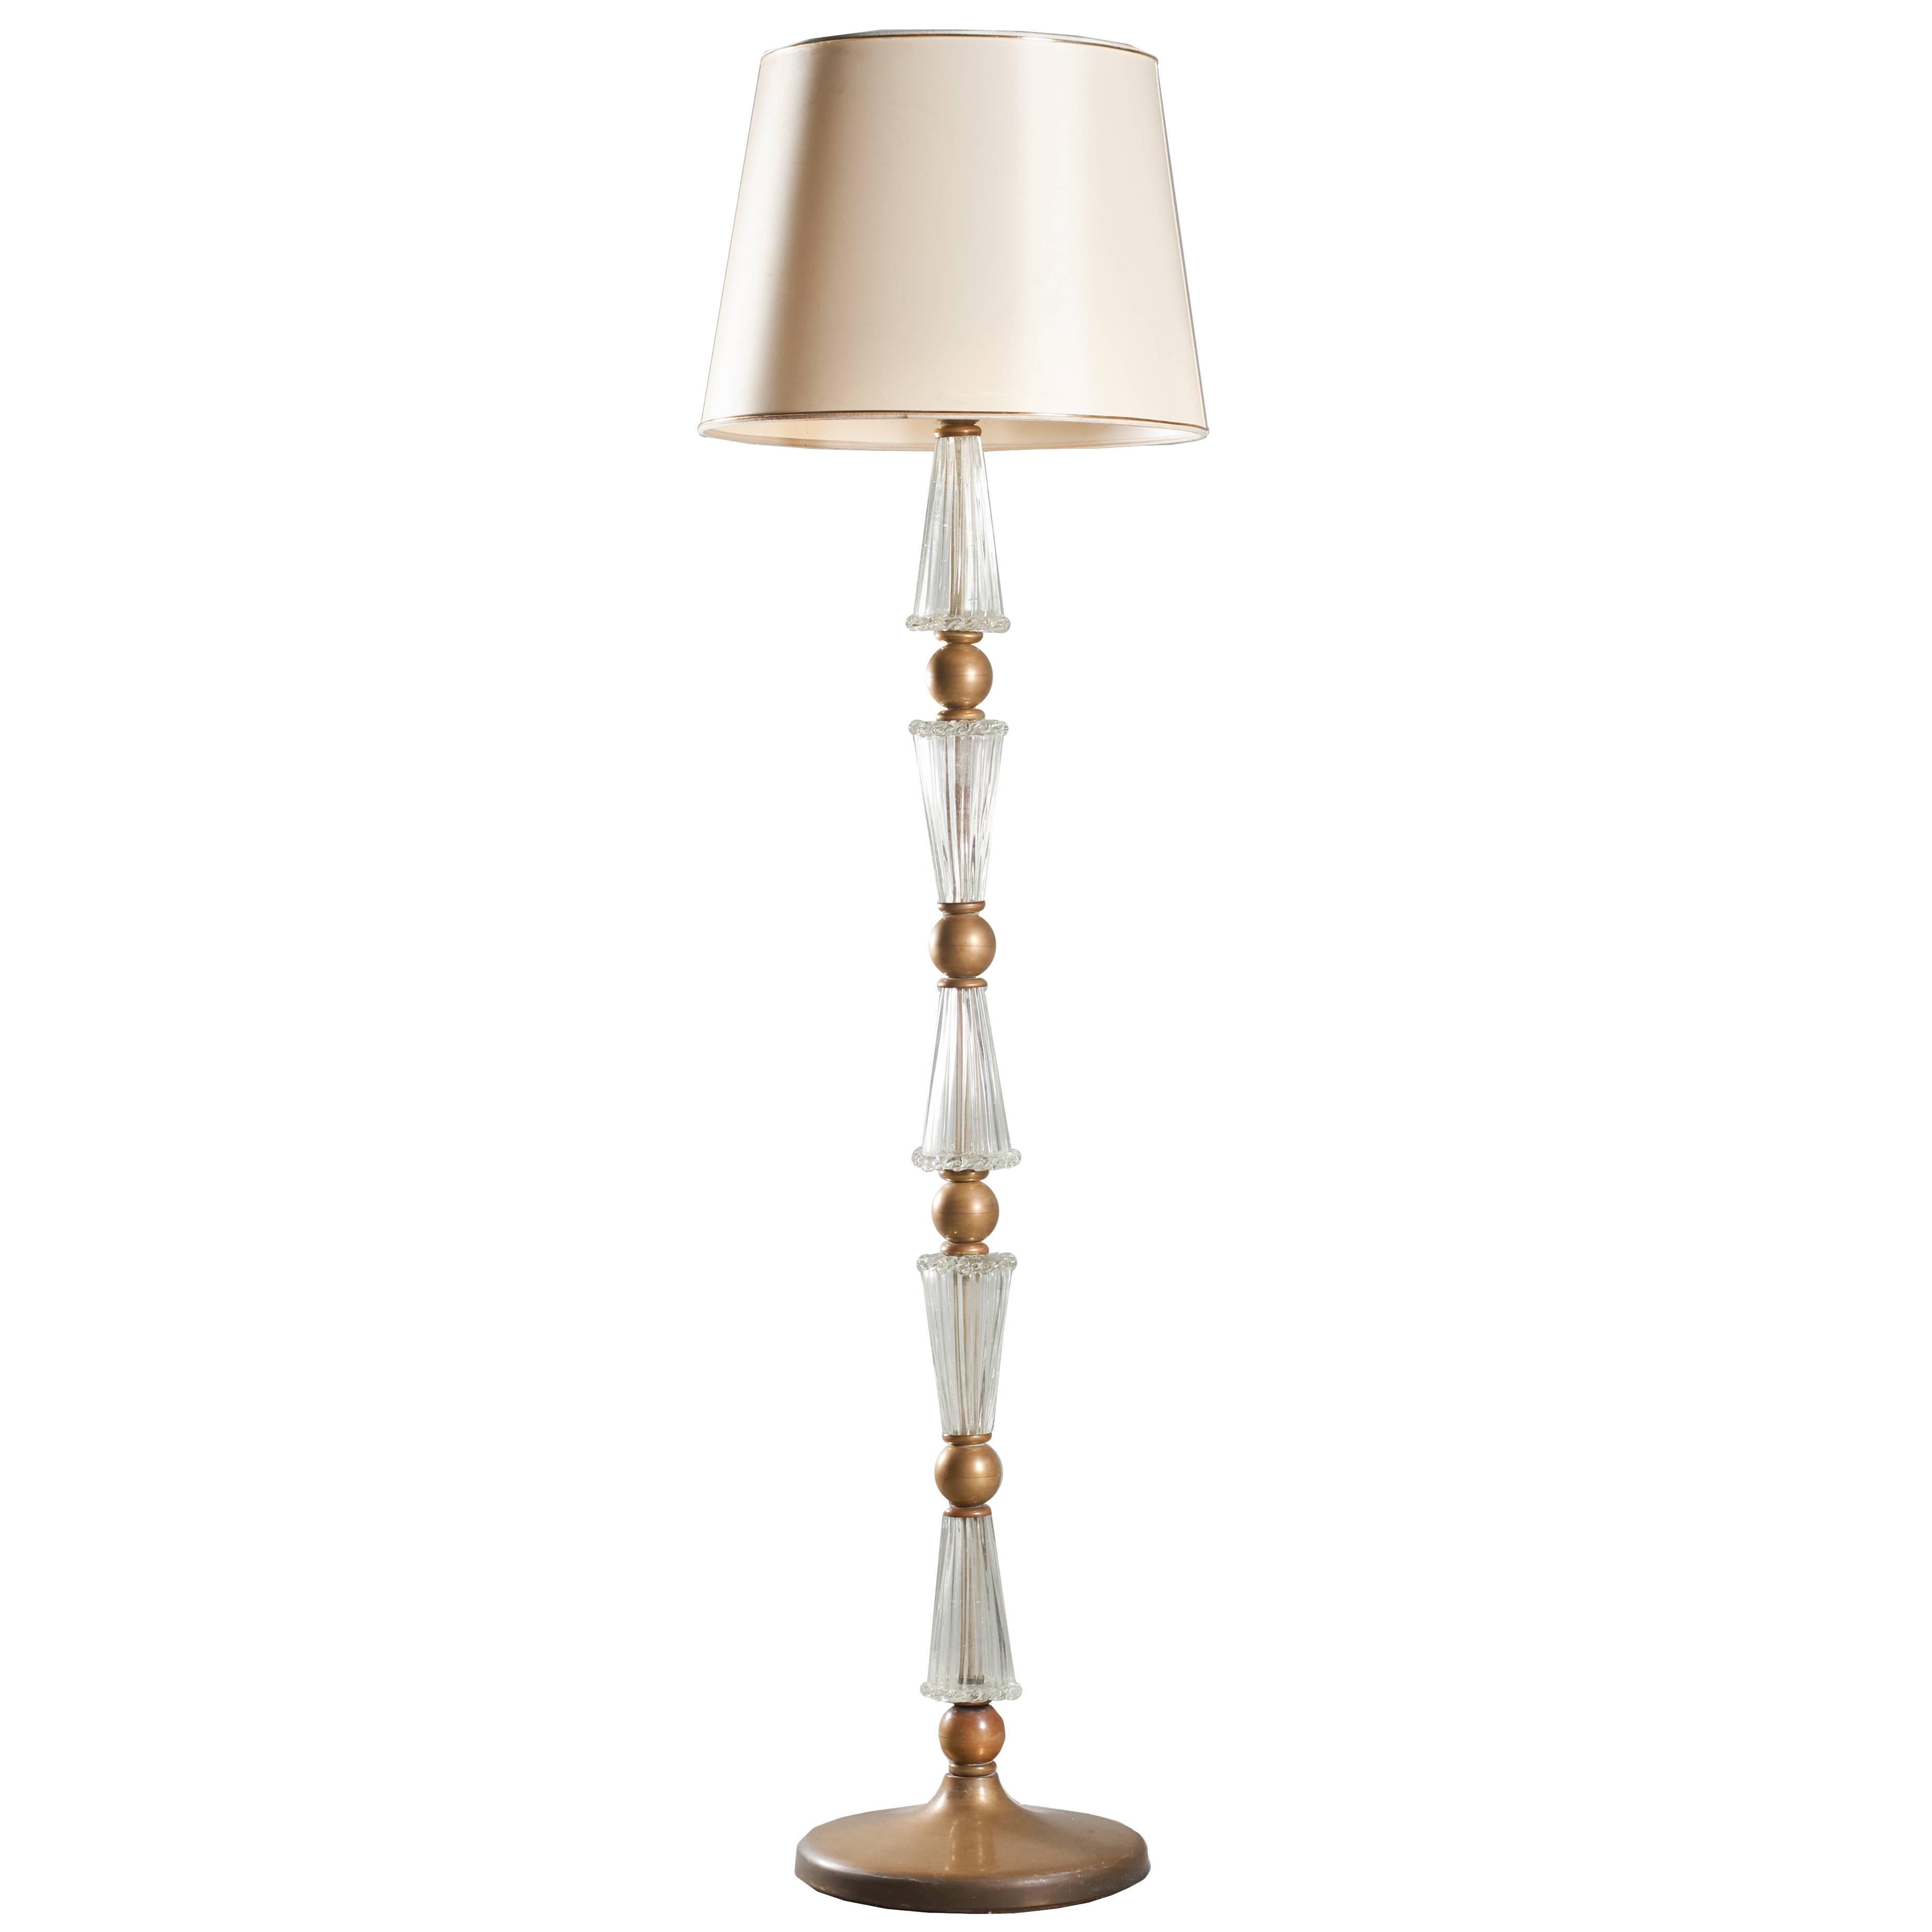 Wonderful Floor Lamp Attributed to Barovier For Sale